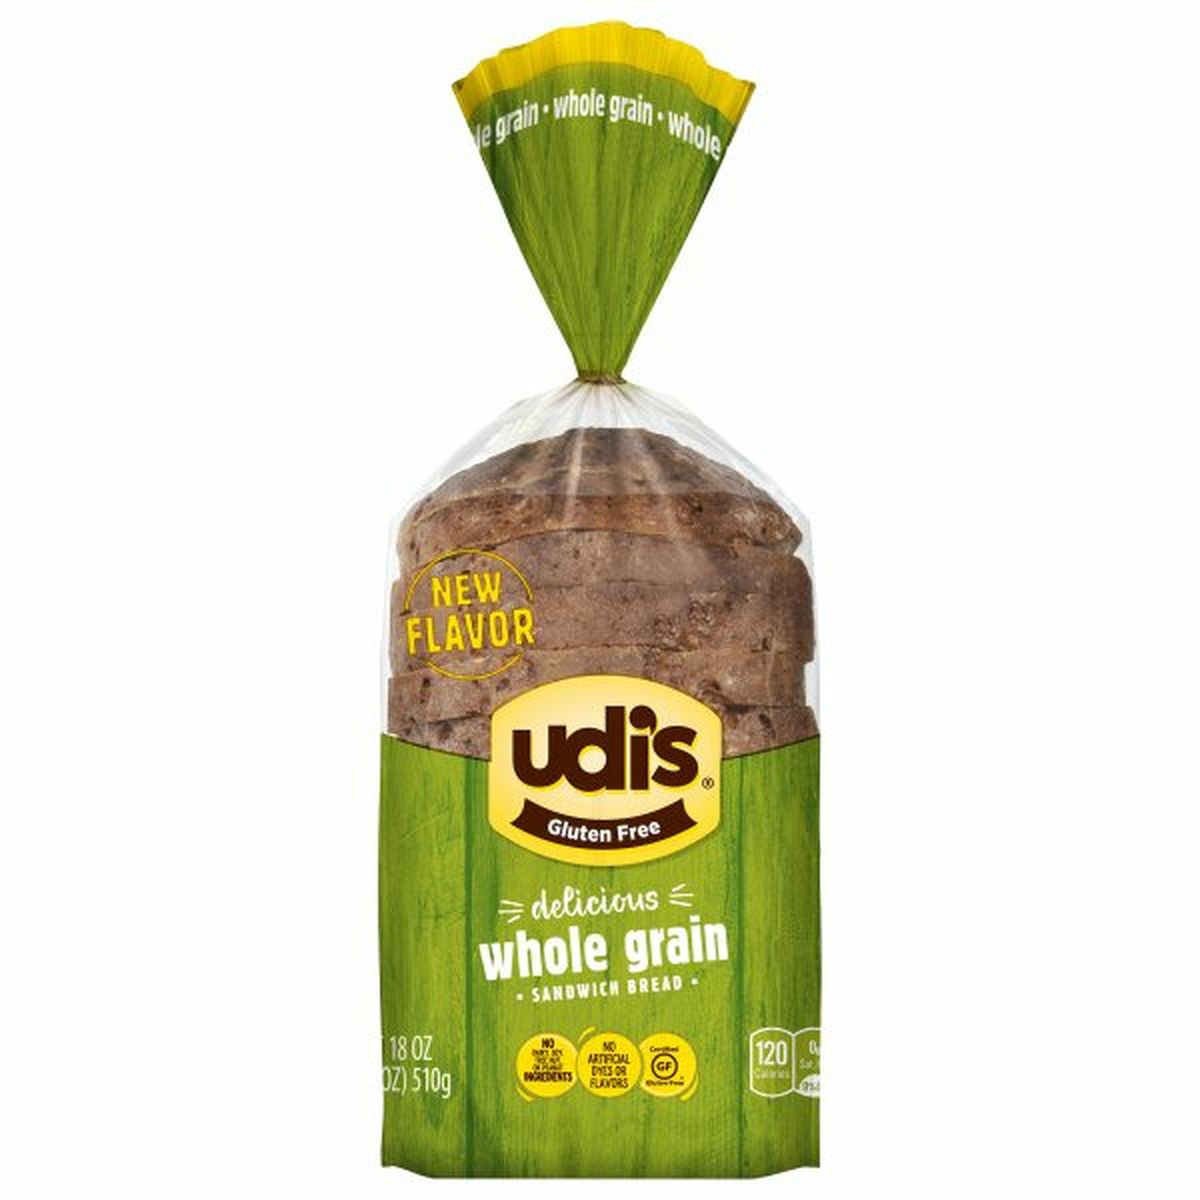 Calories in Udi's Gluten Free Sandwich Bread, Whole Grain